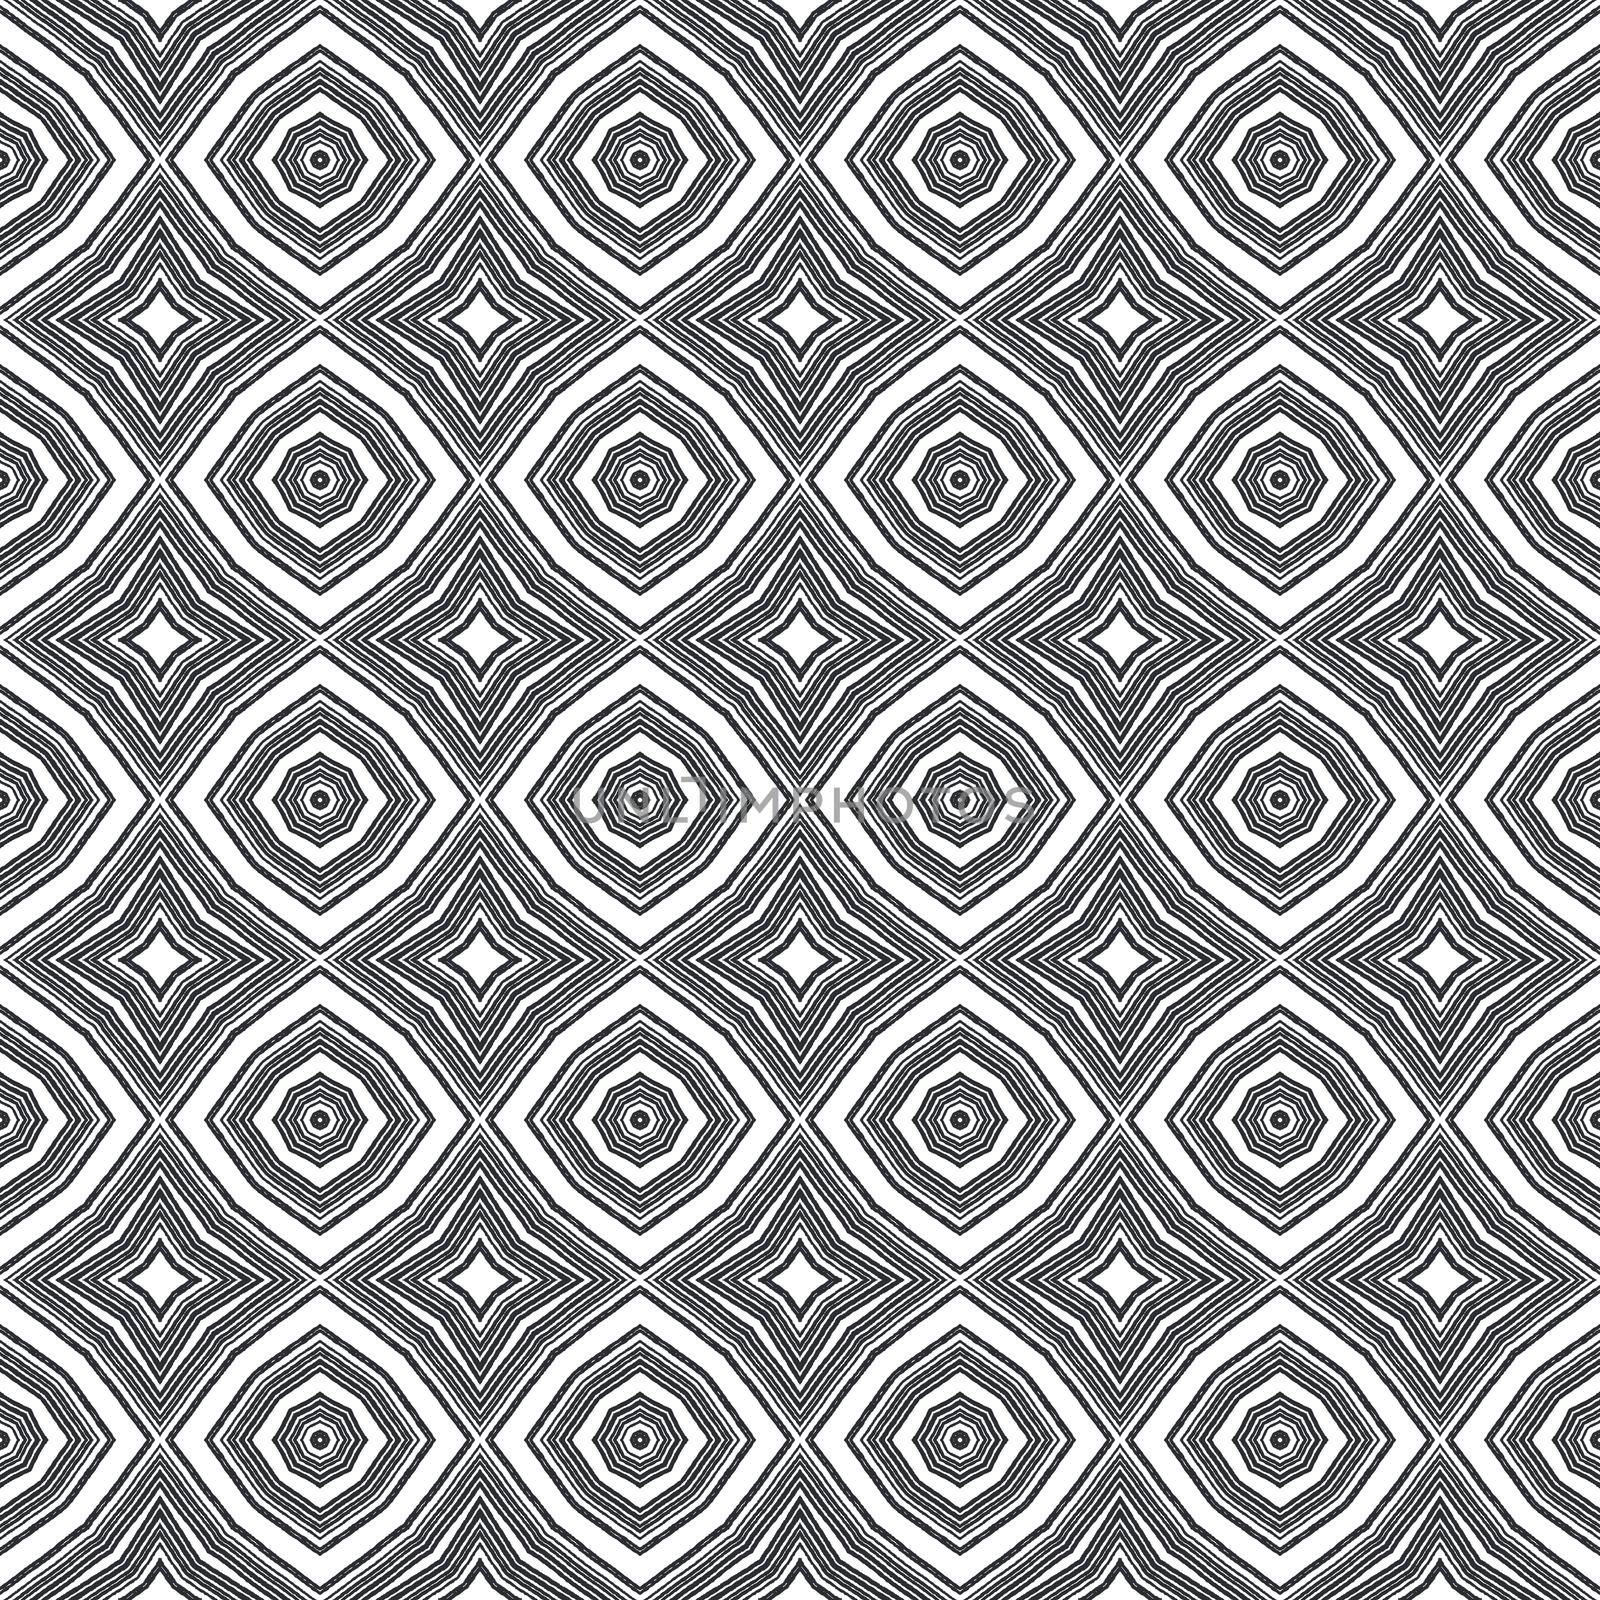 Textured stripes pattern. Black symmetrical kaleidoscope background. Trendy textured stripes design. Textile ready bold print, swimwear fabric, wallpaper, wrapping.